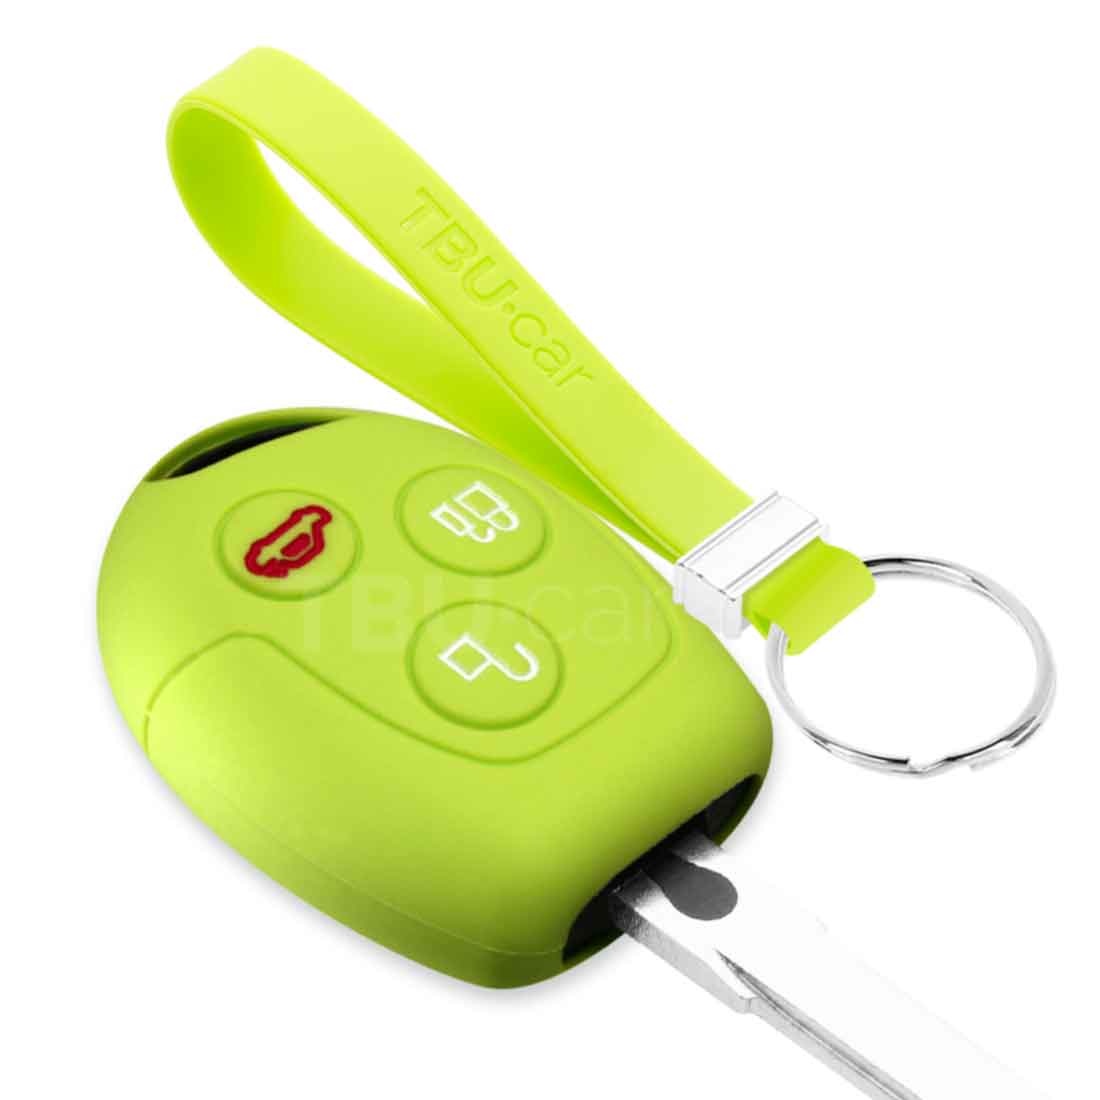 TBU car TBU car Autoschlüssel Hülle kompatibel mit Ford 3 Tasten - Schutzhülle aus Silikon - Auto Schlüsselhülle Cover in Lindgrün